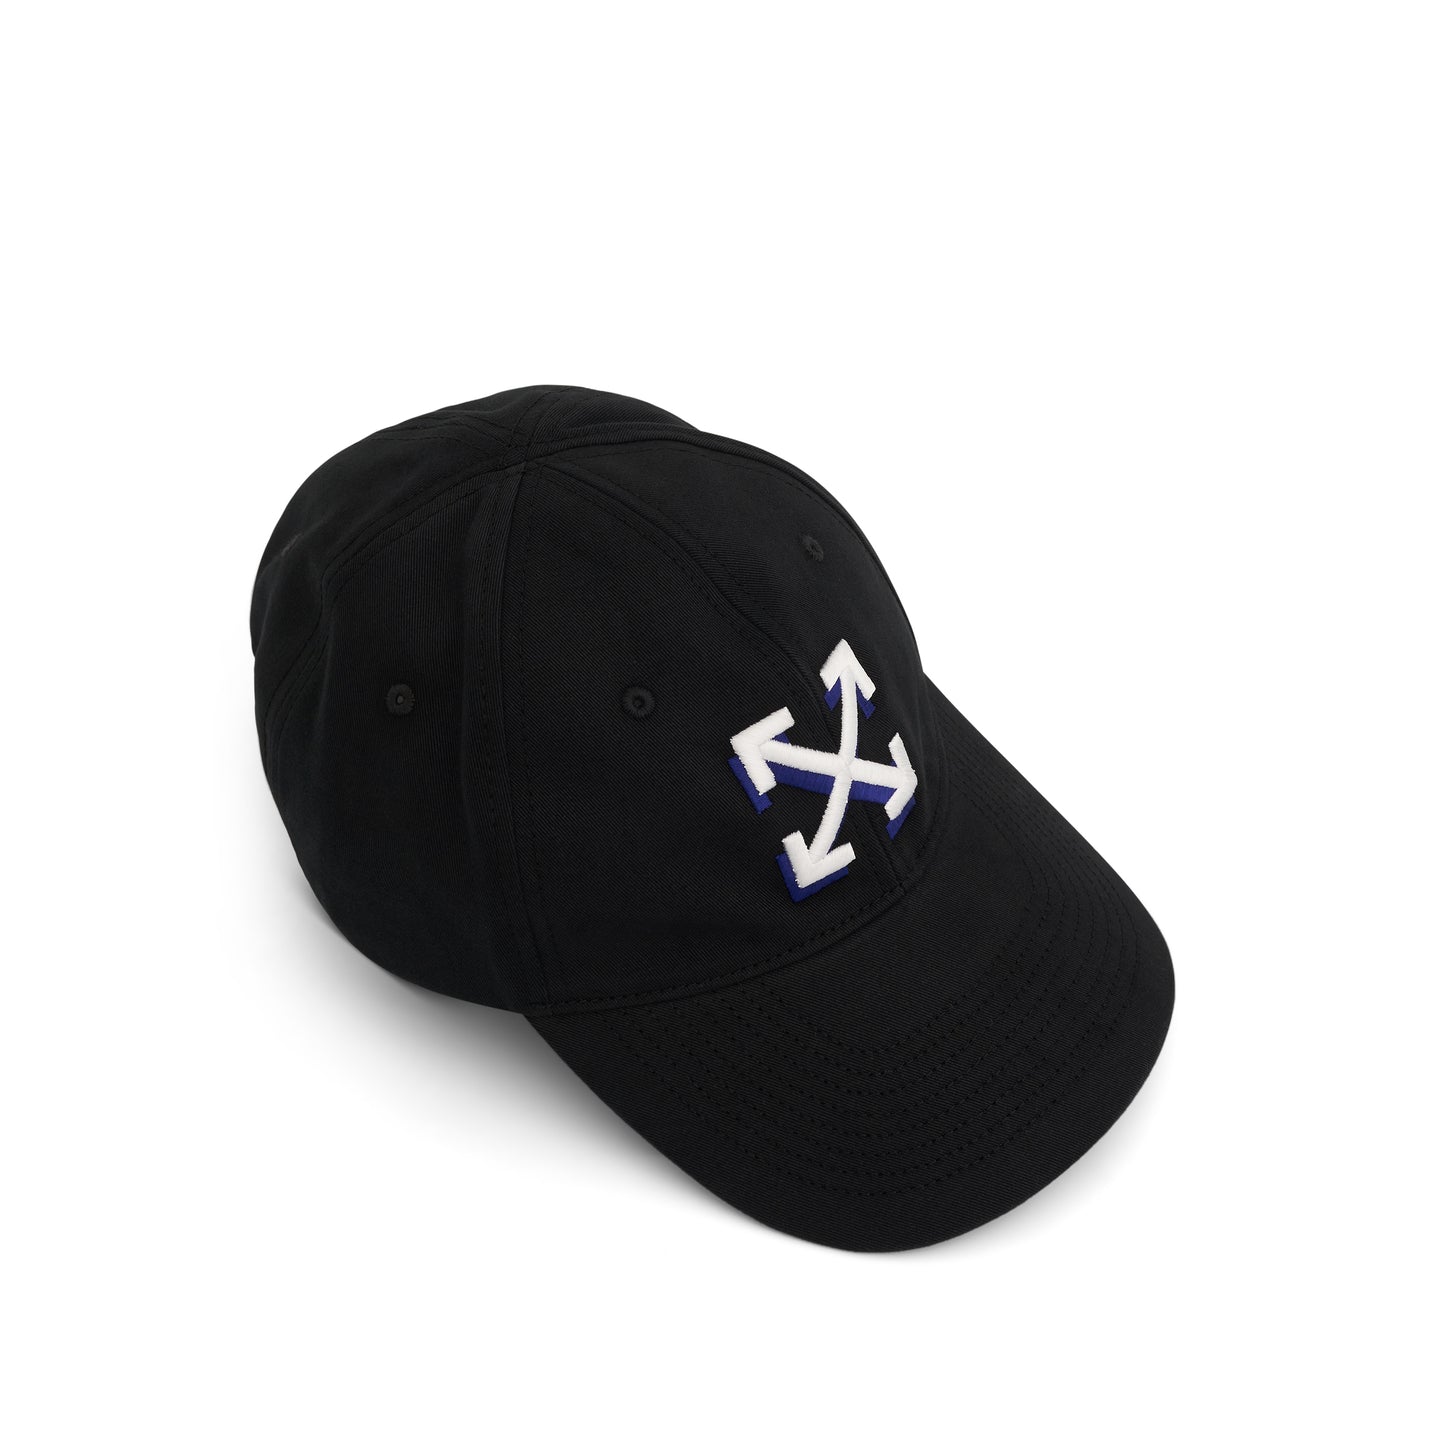 Arrow Baseball Cap in Black/White/Blue